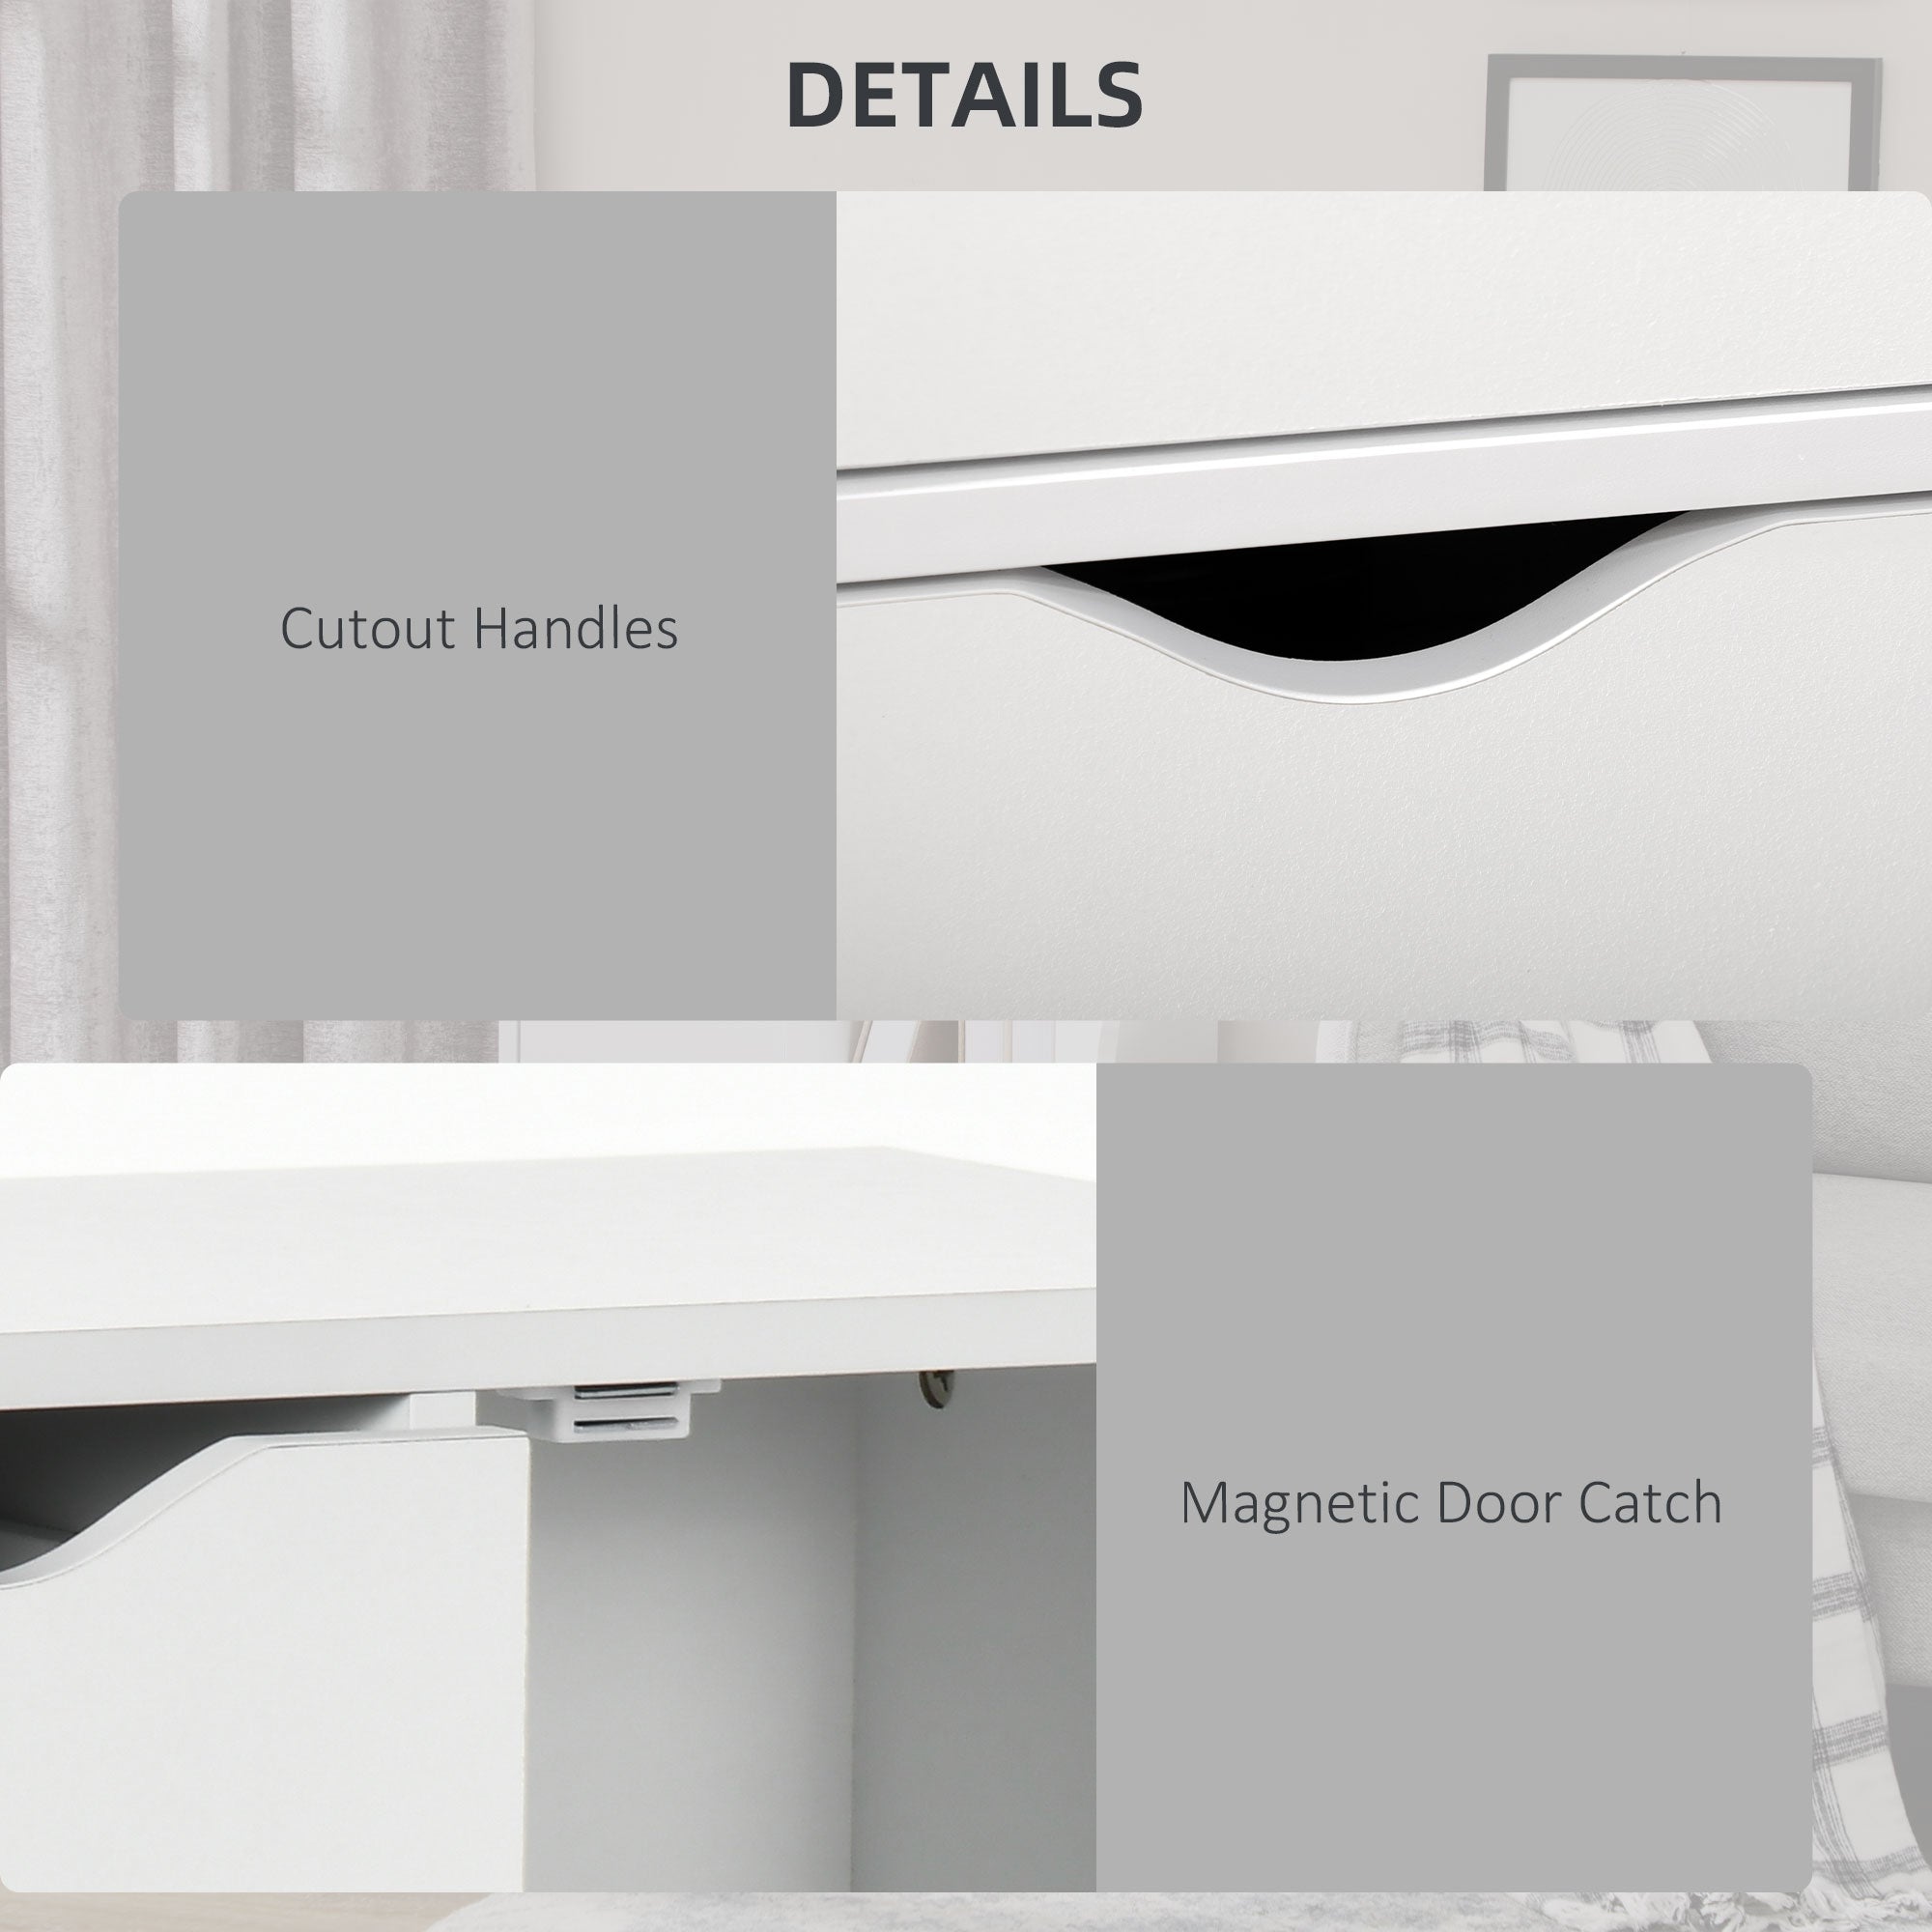 HOMCOM Bathroom Cabinet, Freestanding Storage Cabinet with 4 Drawers, Door Cupboard for Living Room, Kitchen, Bedroom, White